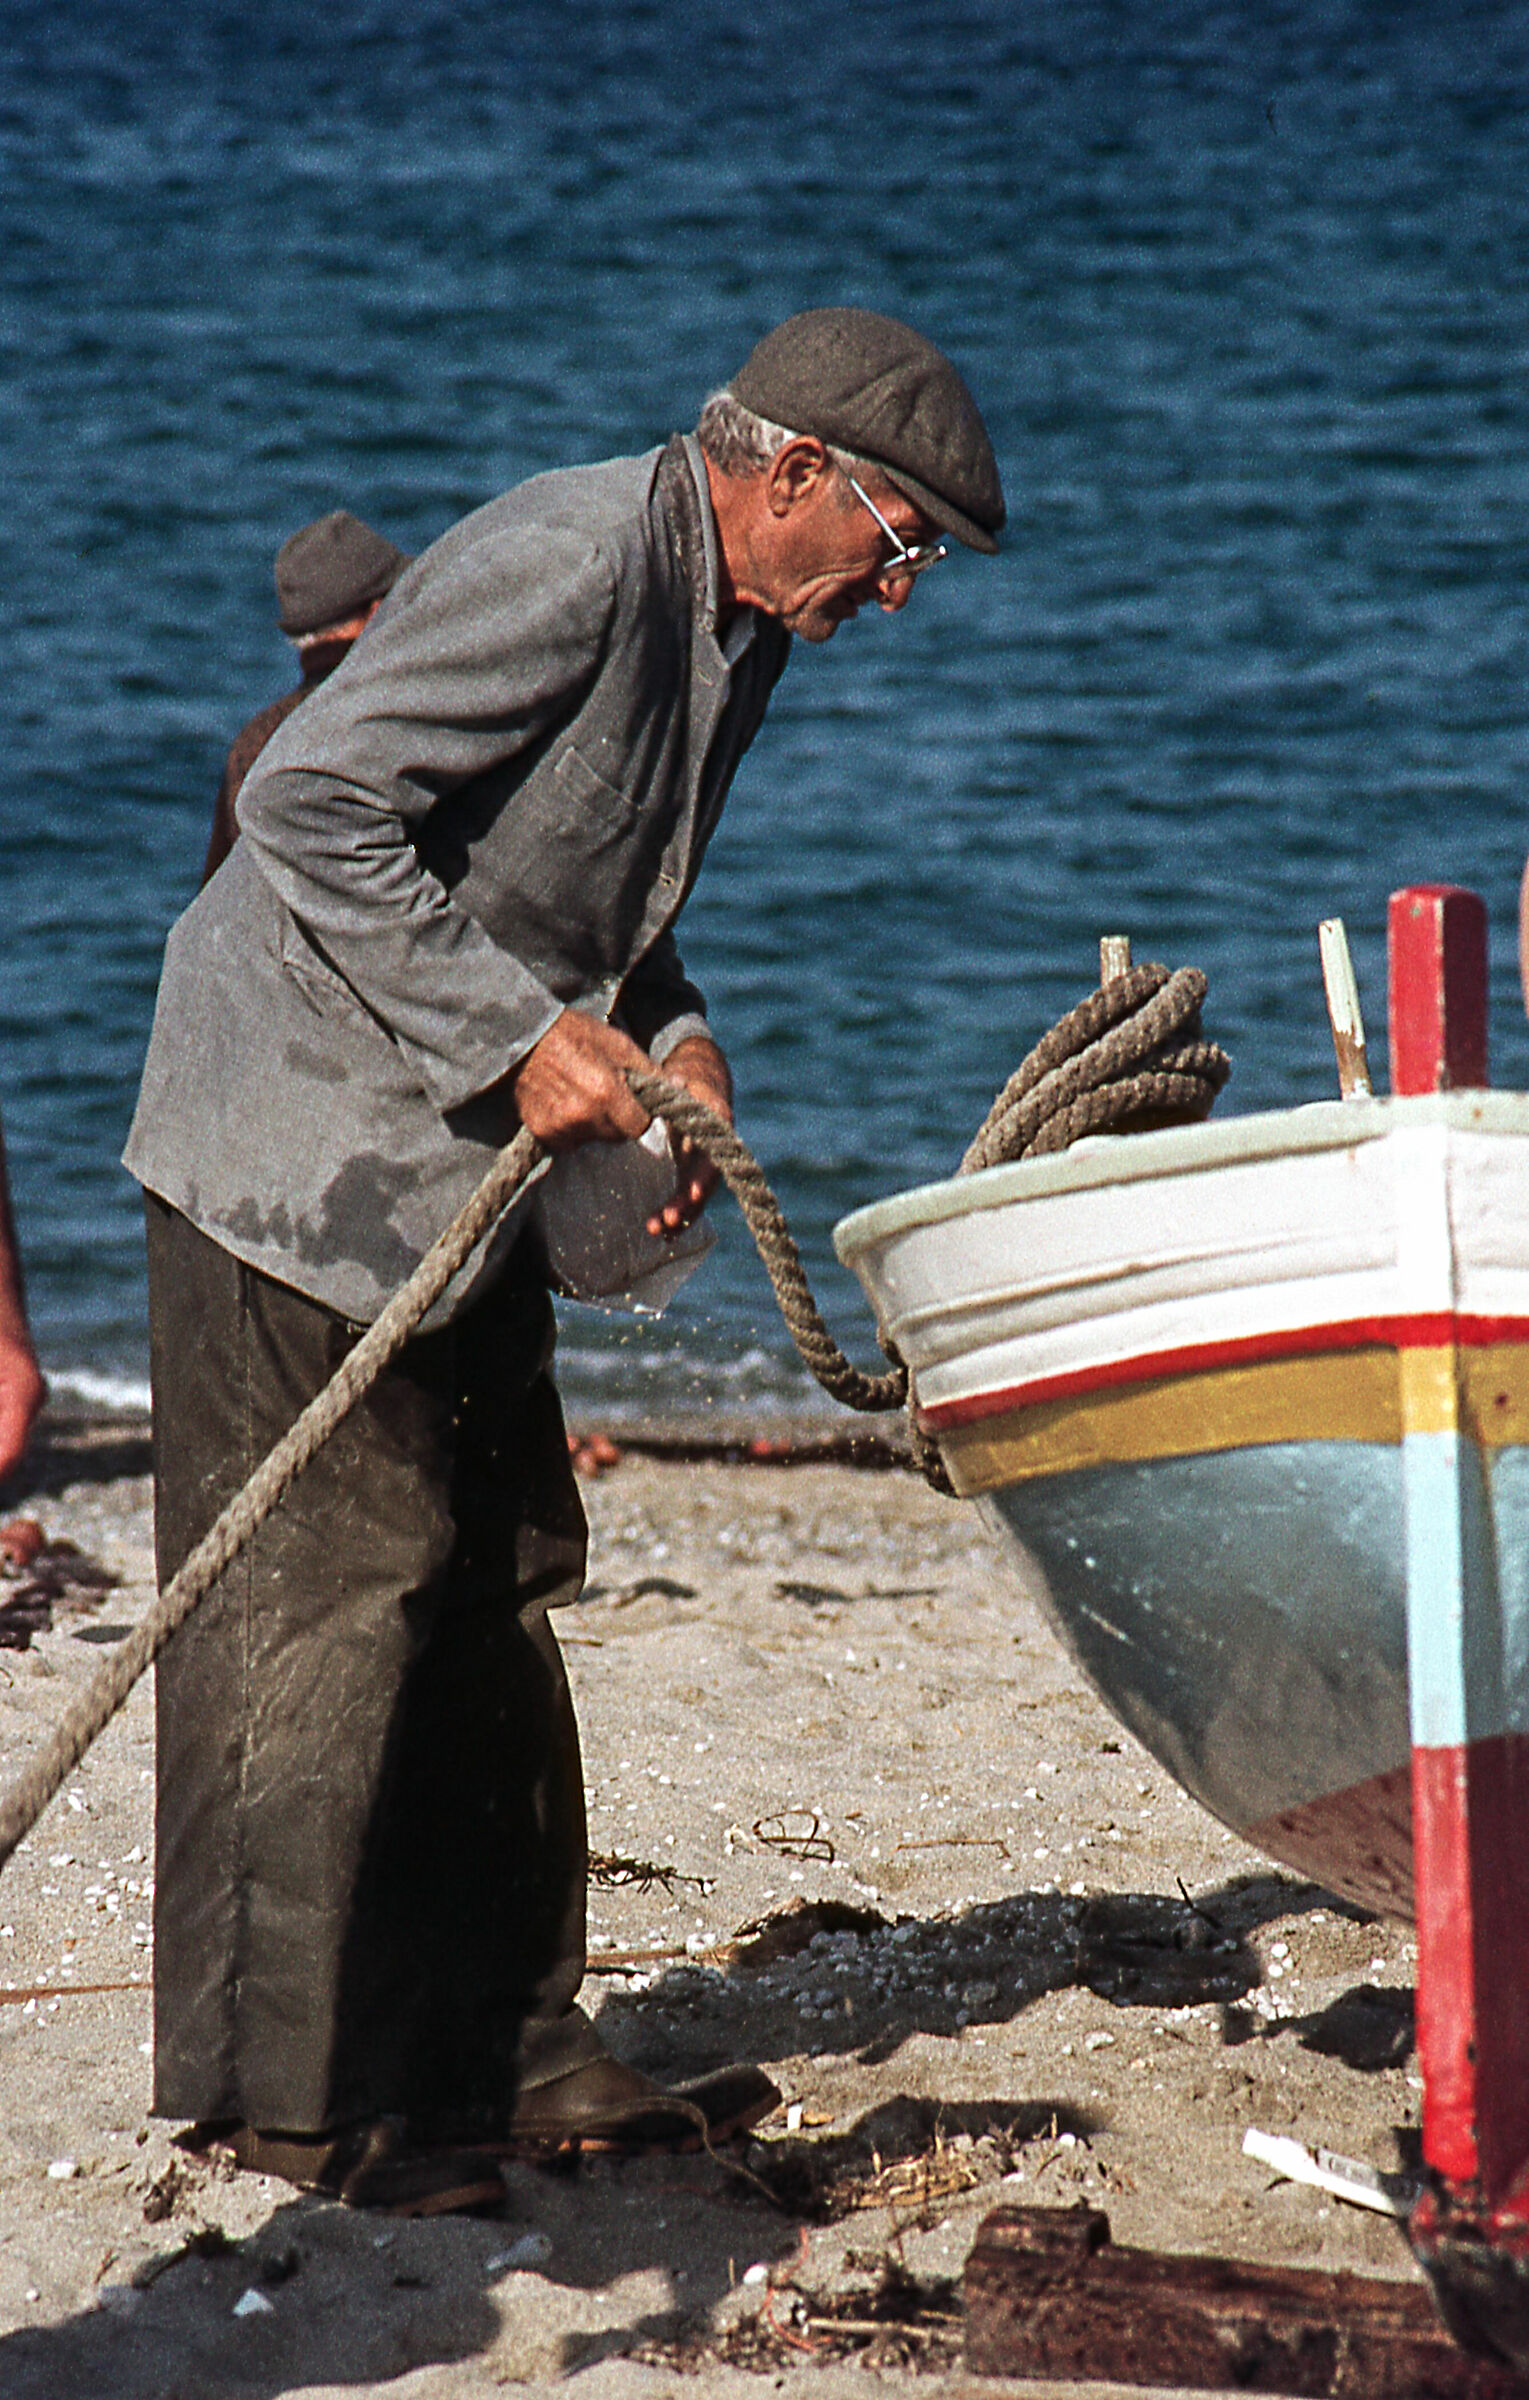 An elderly fisherman...